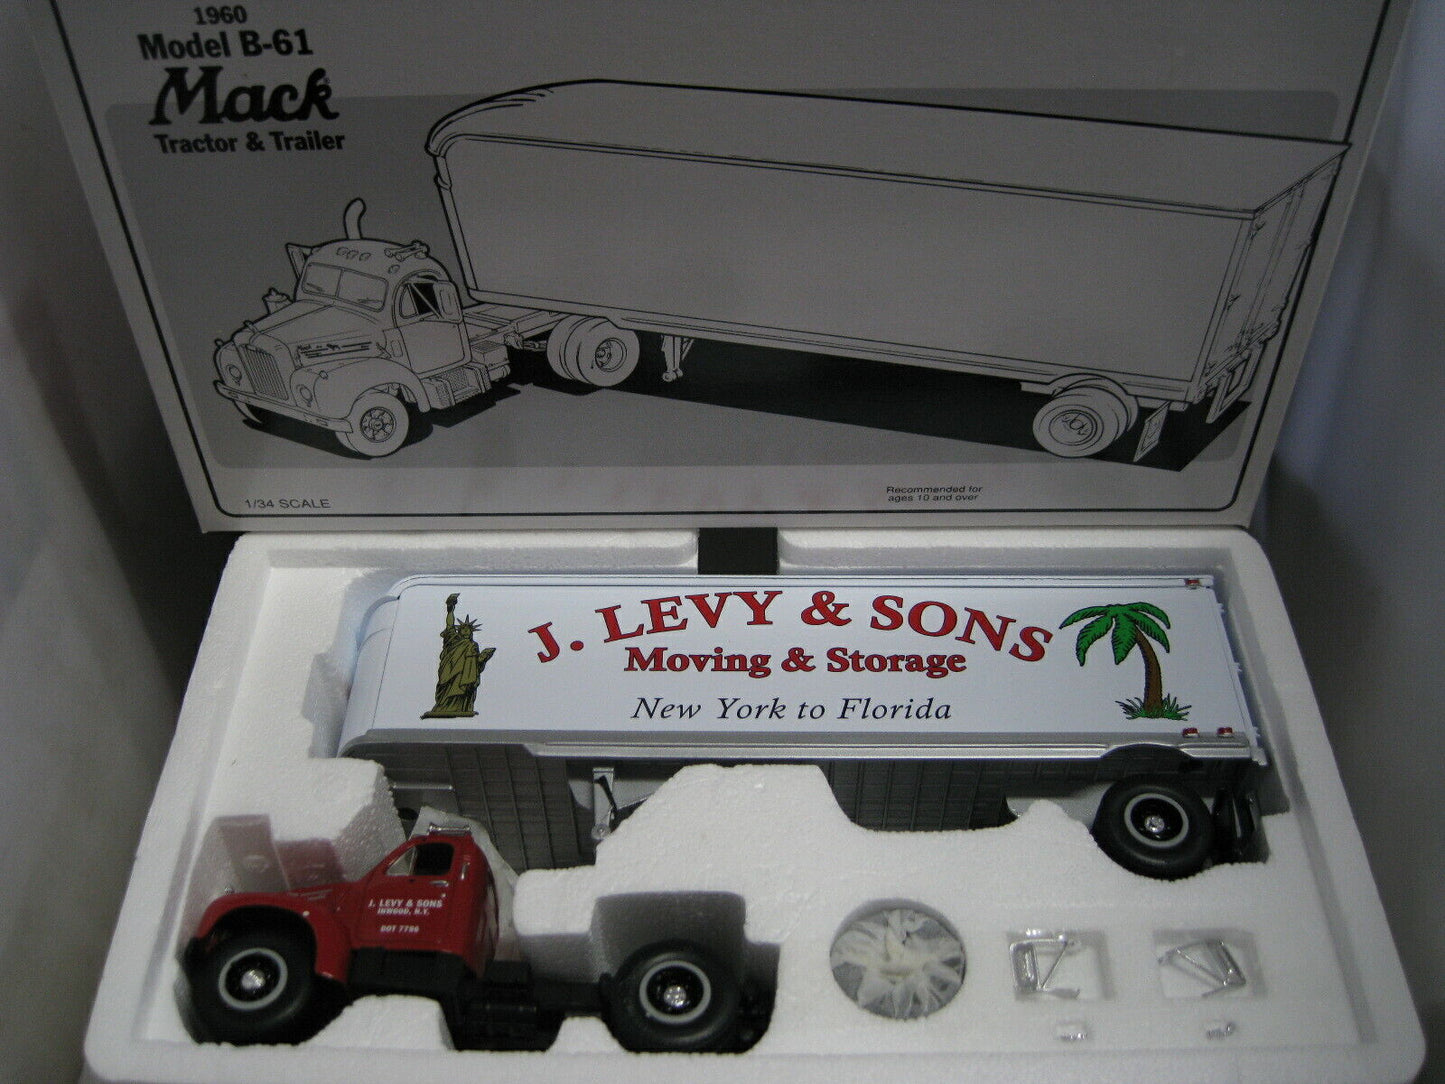 1.34 1St First Gear 1960 Model B-61 Mack Truck & Trailer J, Levy & Sons #18-1519